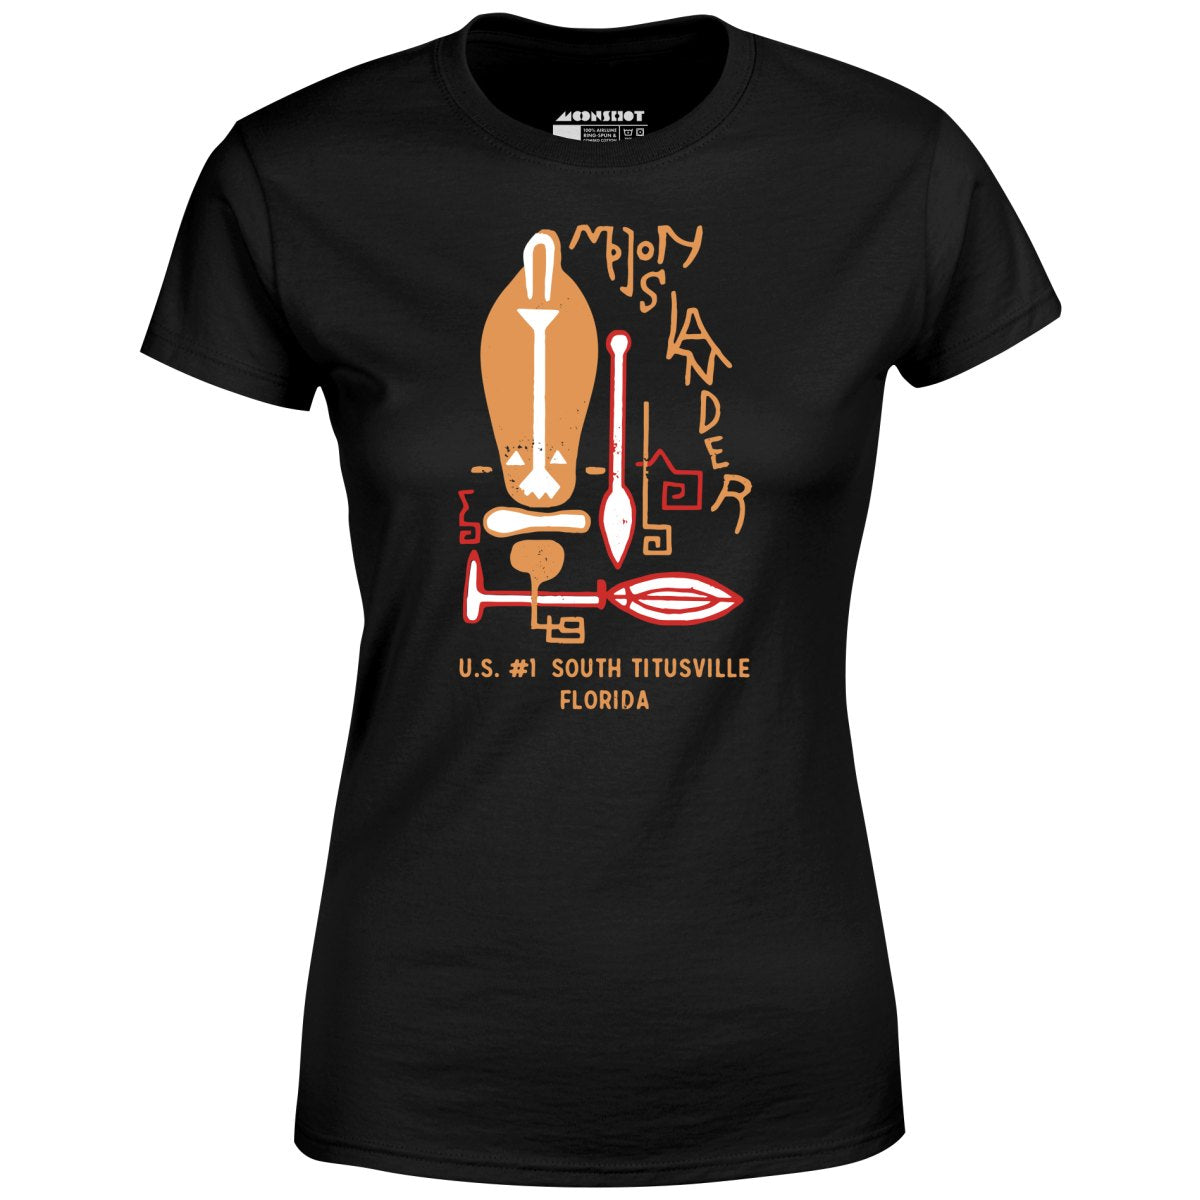 Moon Islander - Titusville, FL - Vintage Tiki Bar -  Women's T-Shirt